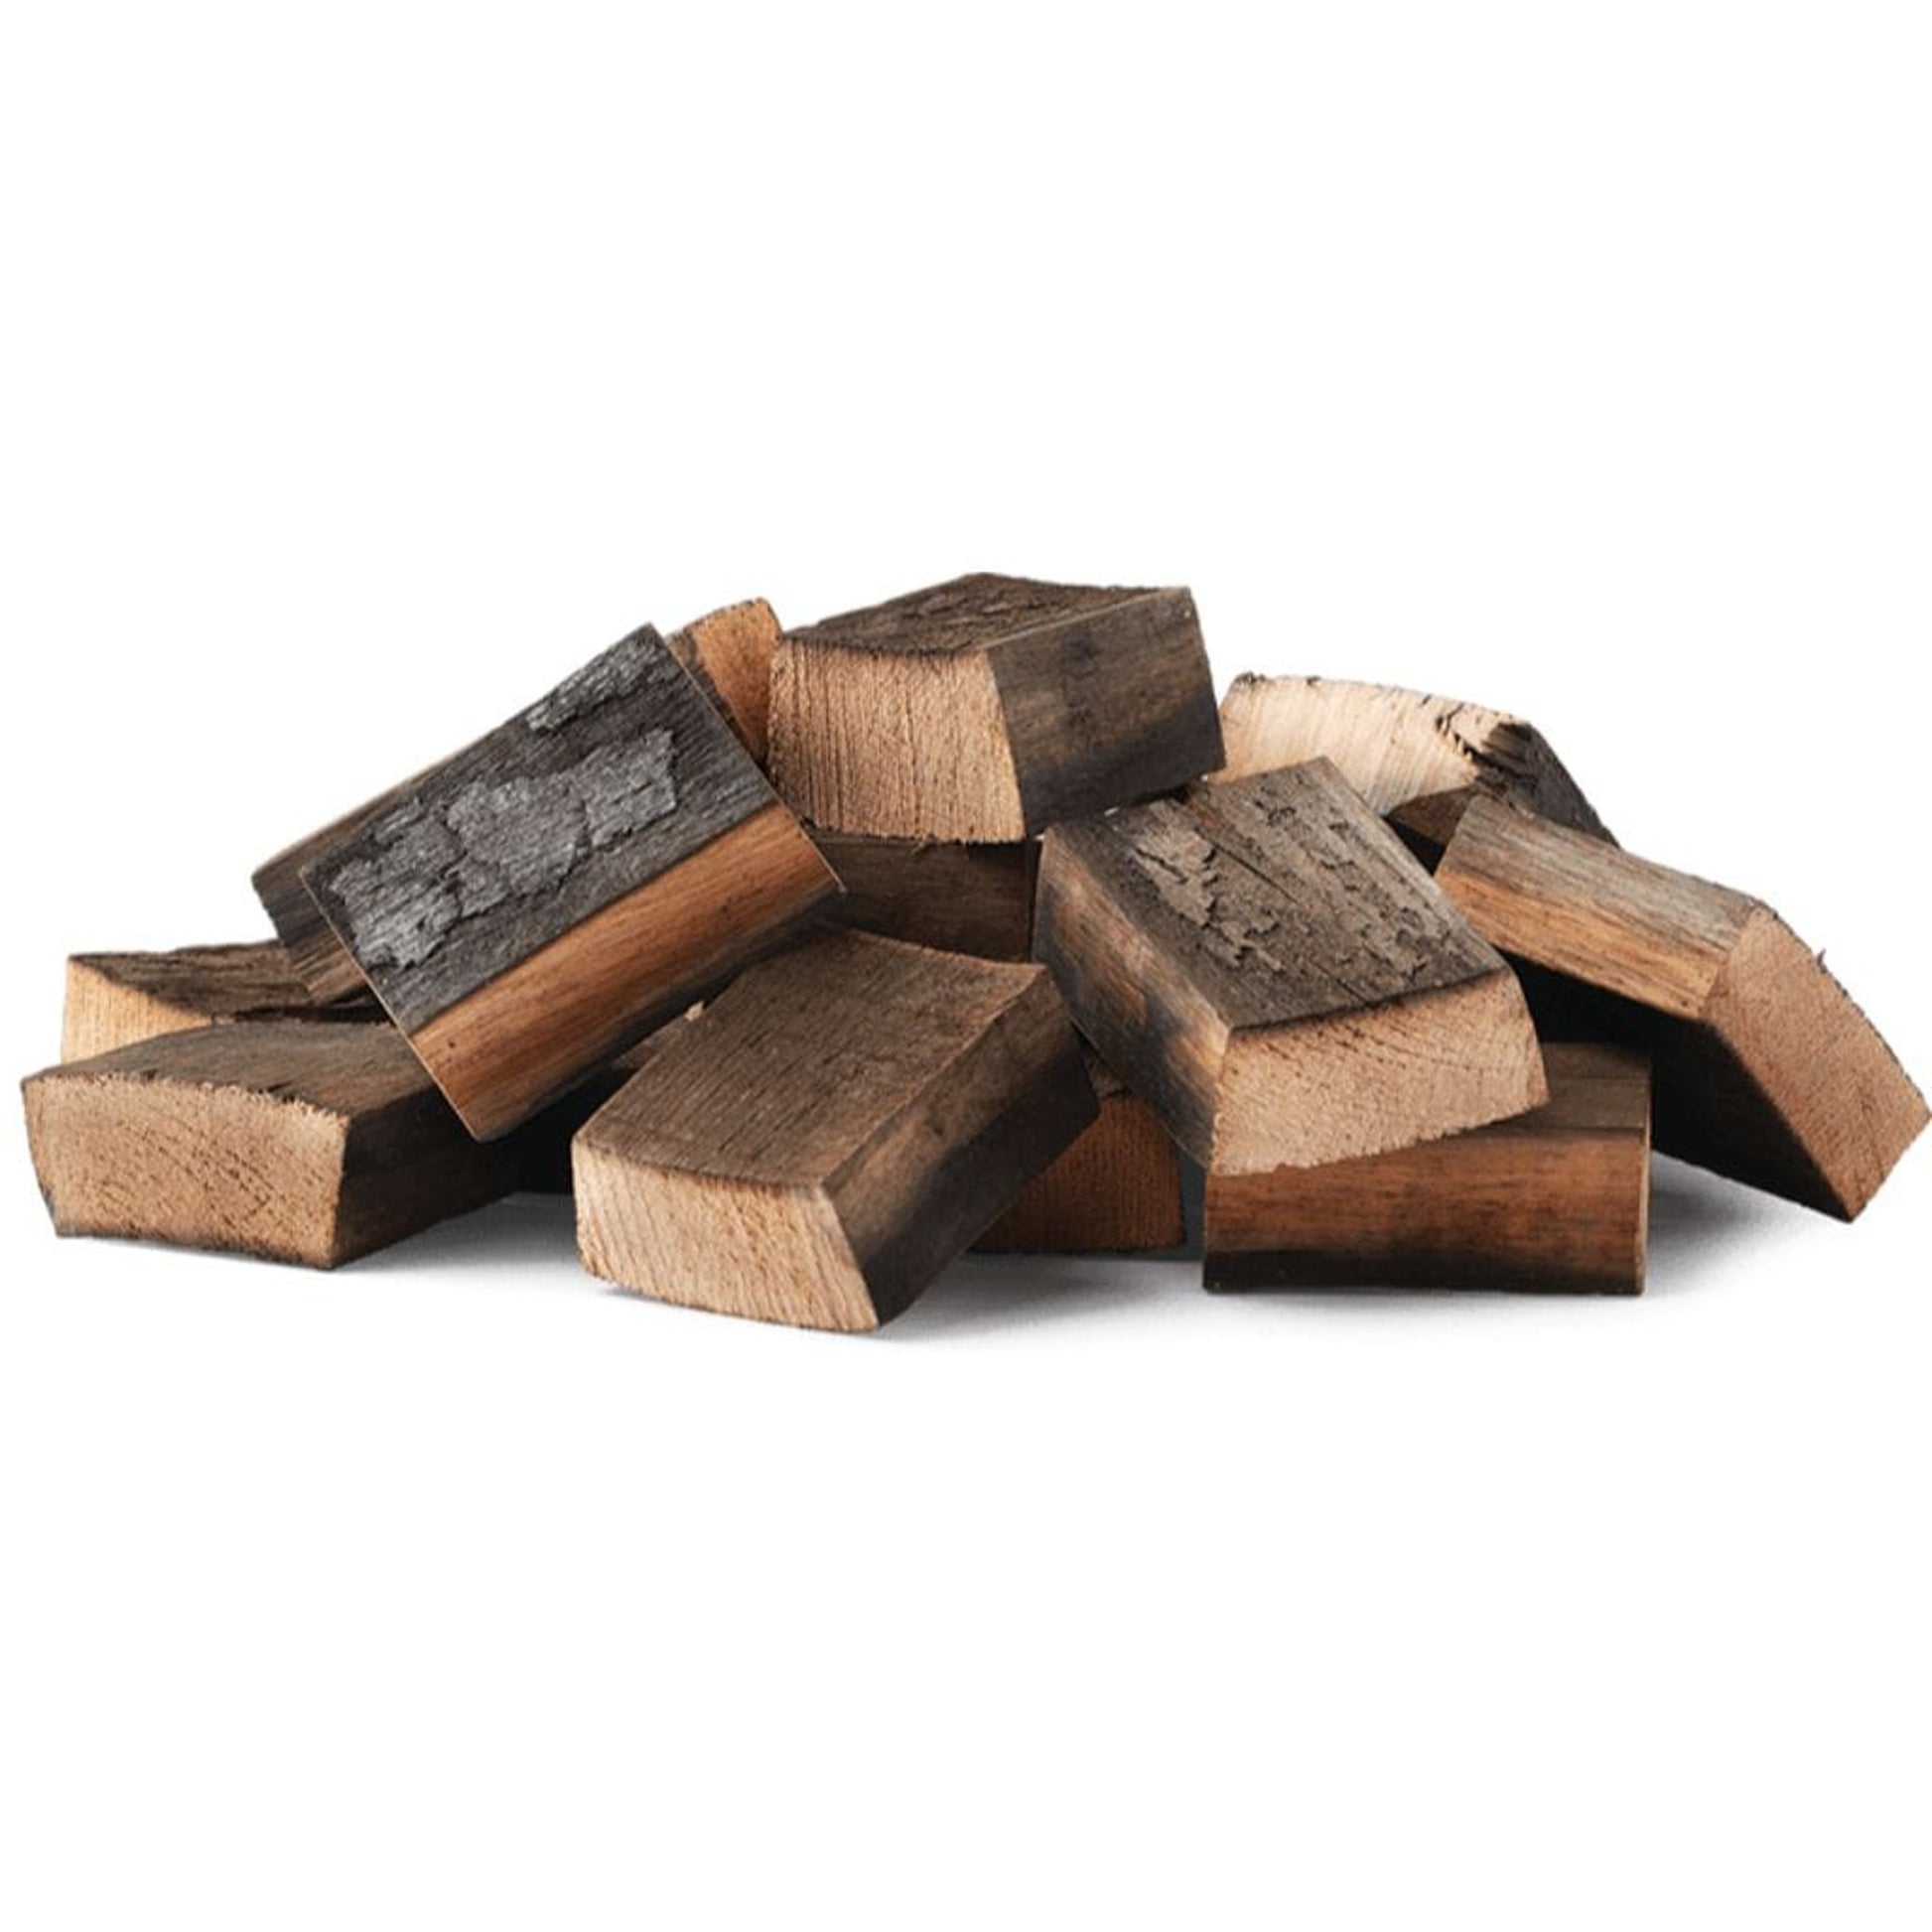 Napoleon Wood / Barrel Chunks Charcoal & Smoker Accessories